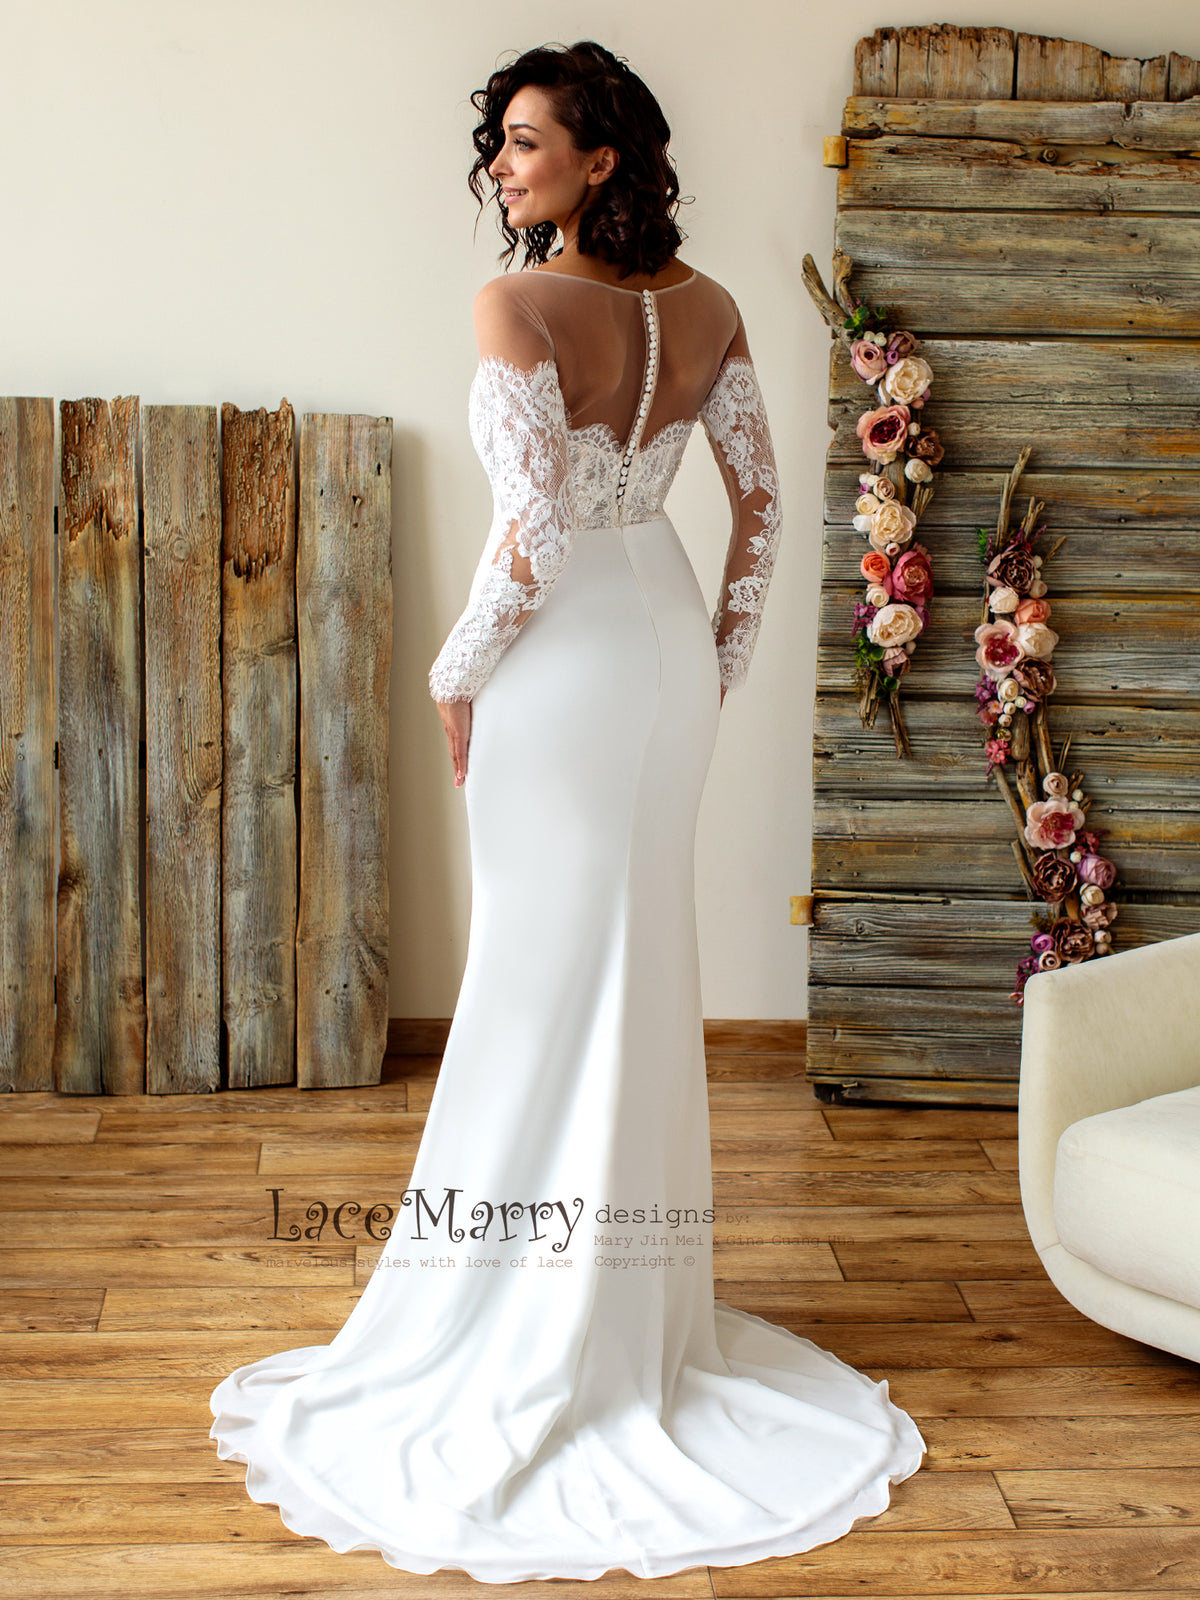 Light and Elegant Beach Wedding Dress